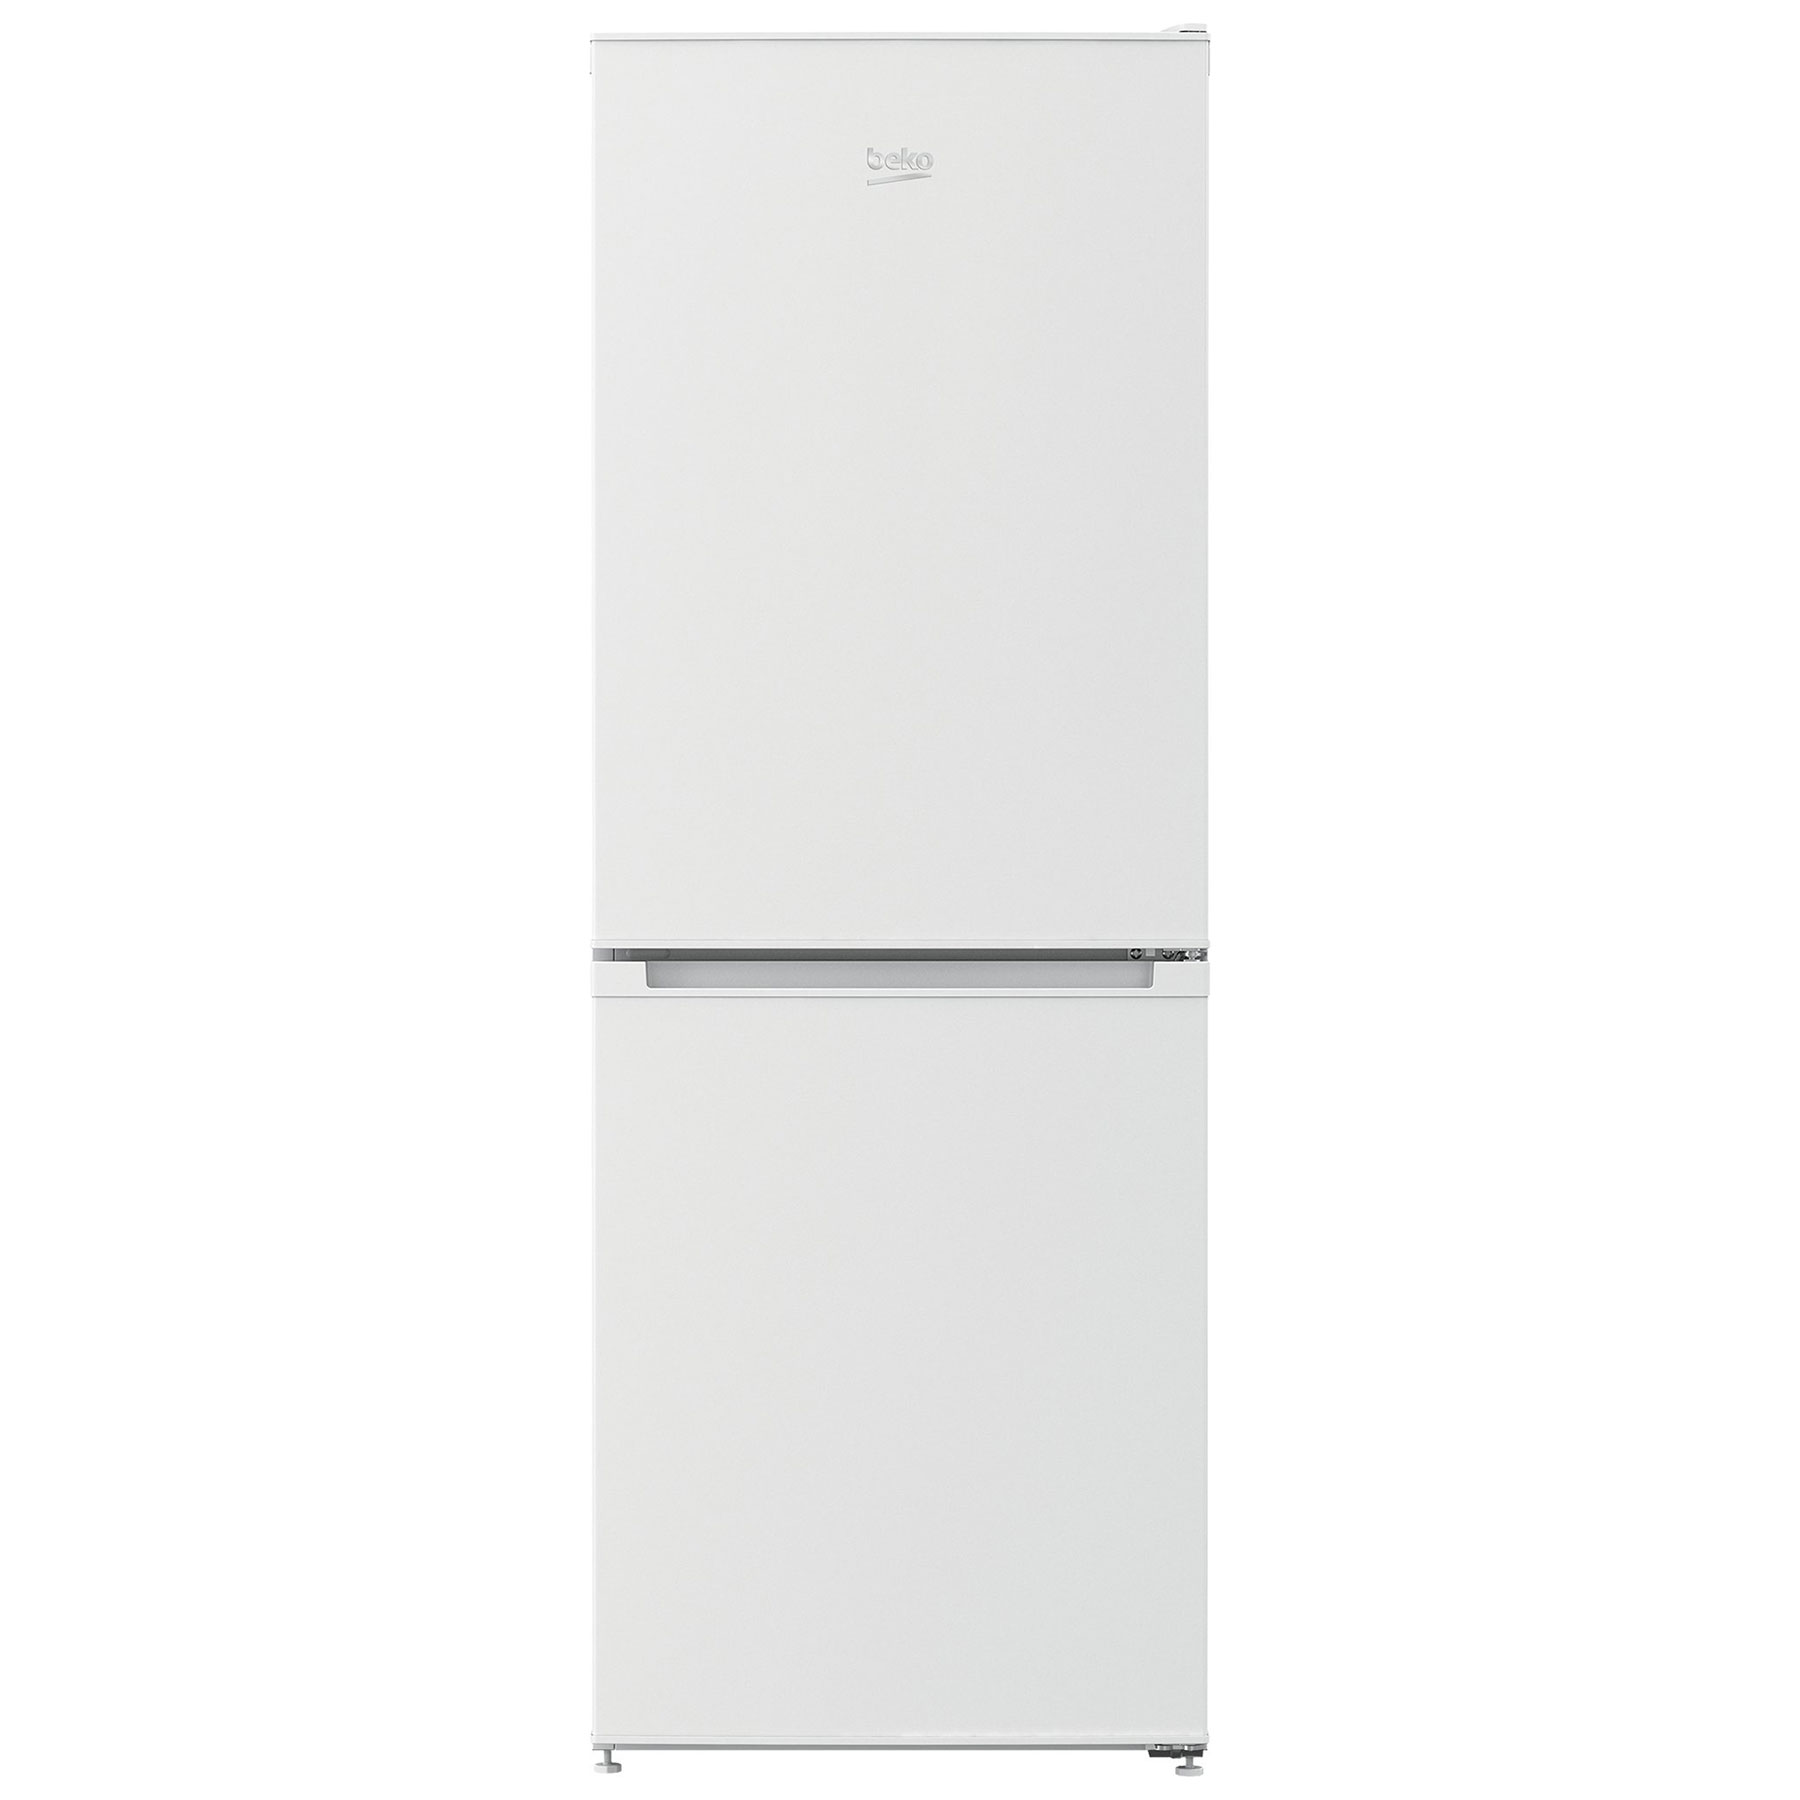 Beko CCFM4552W 54cm Frost Free Fridge Freezer in White 1 53m E Rated